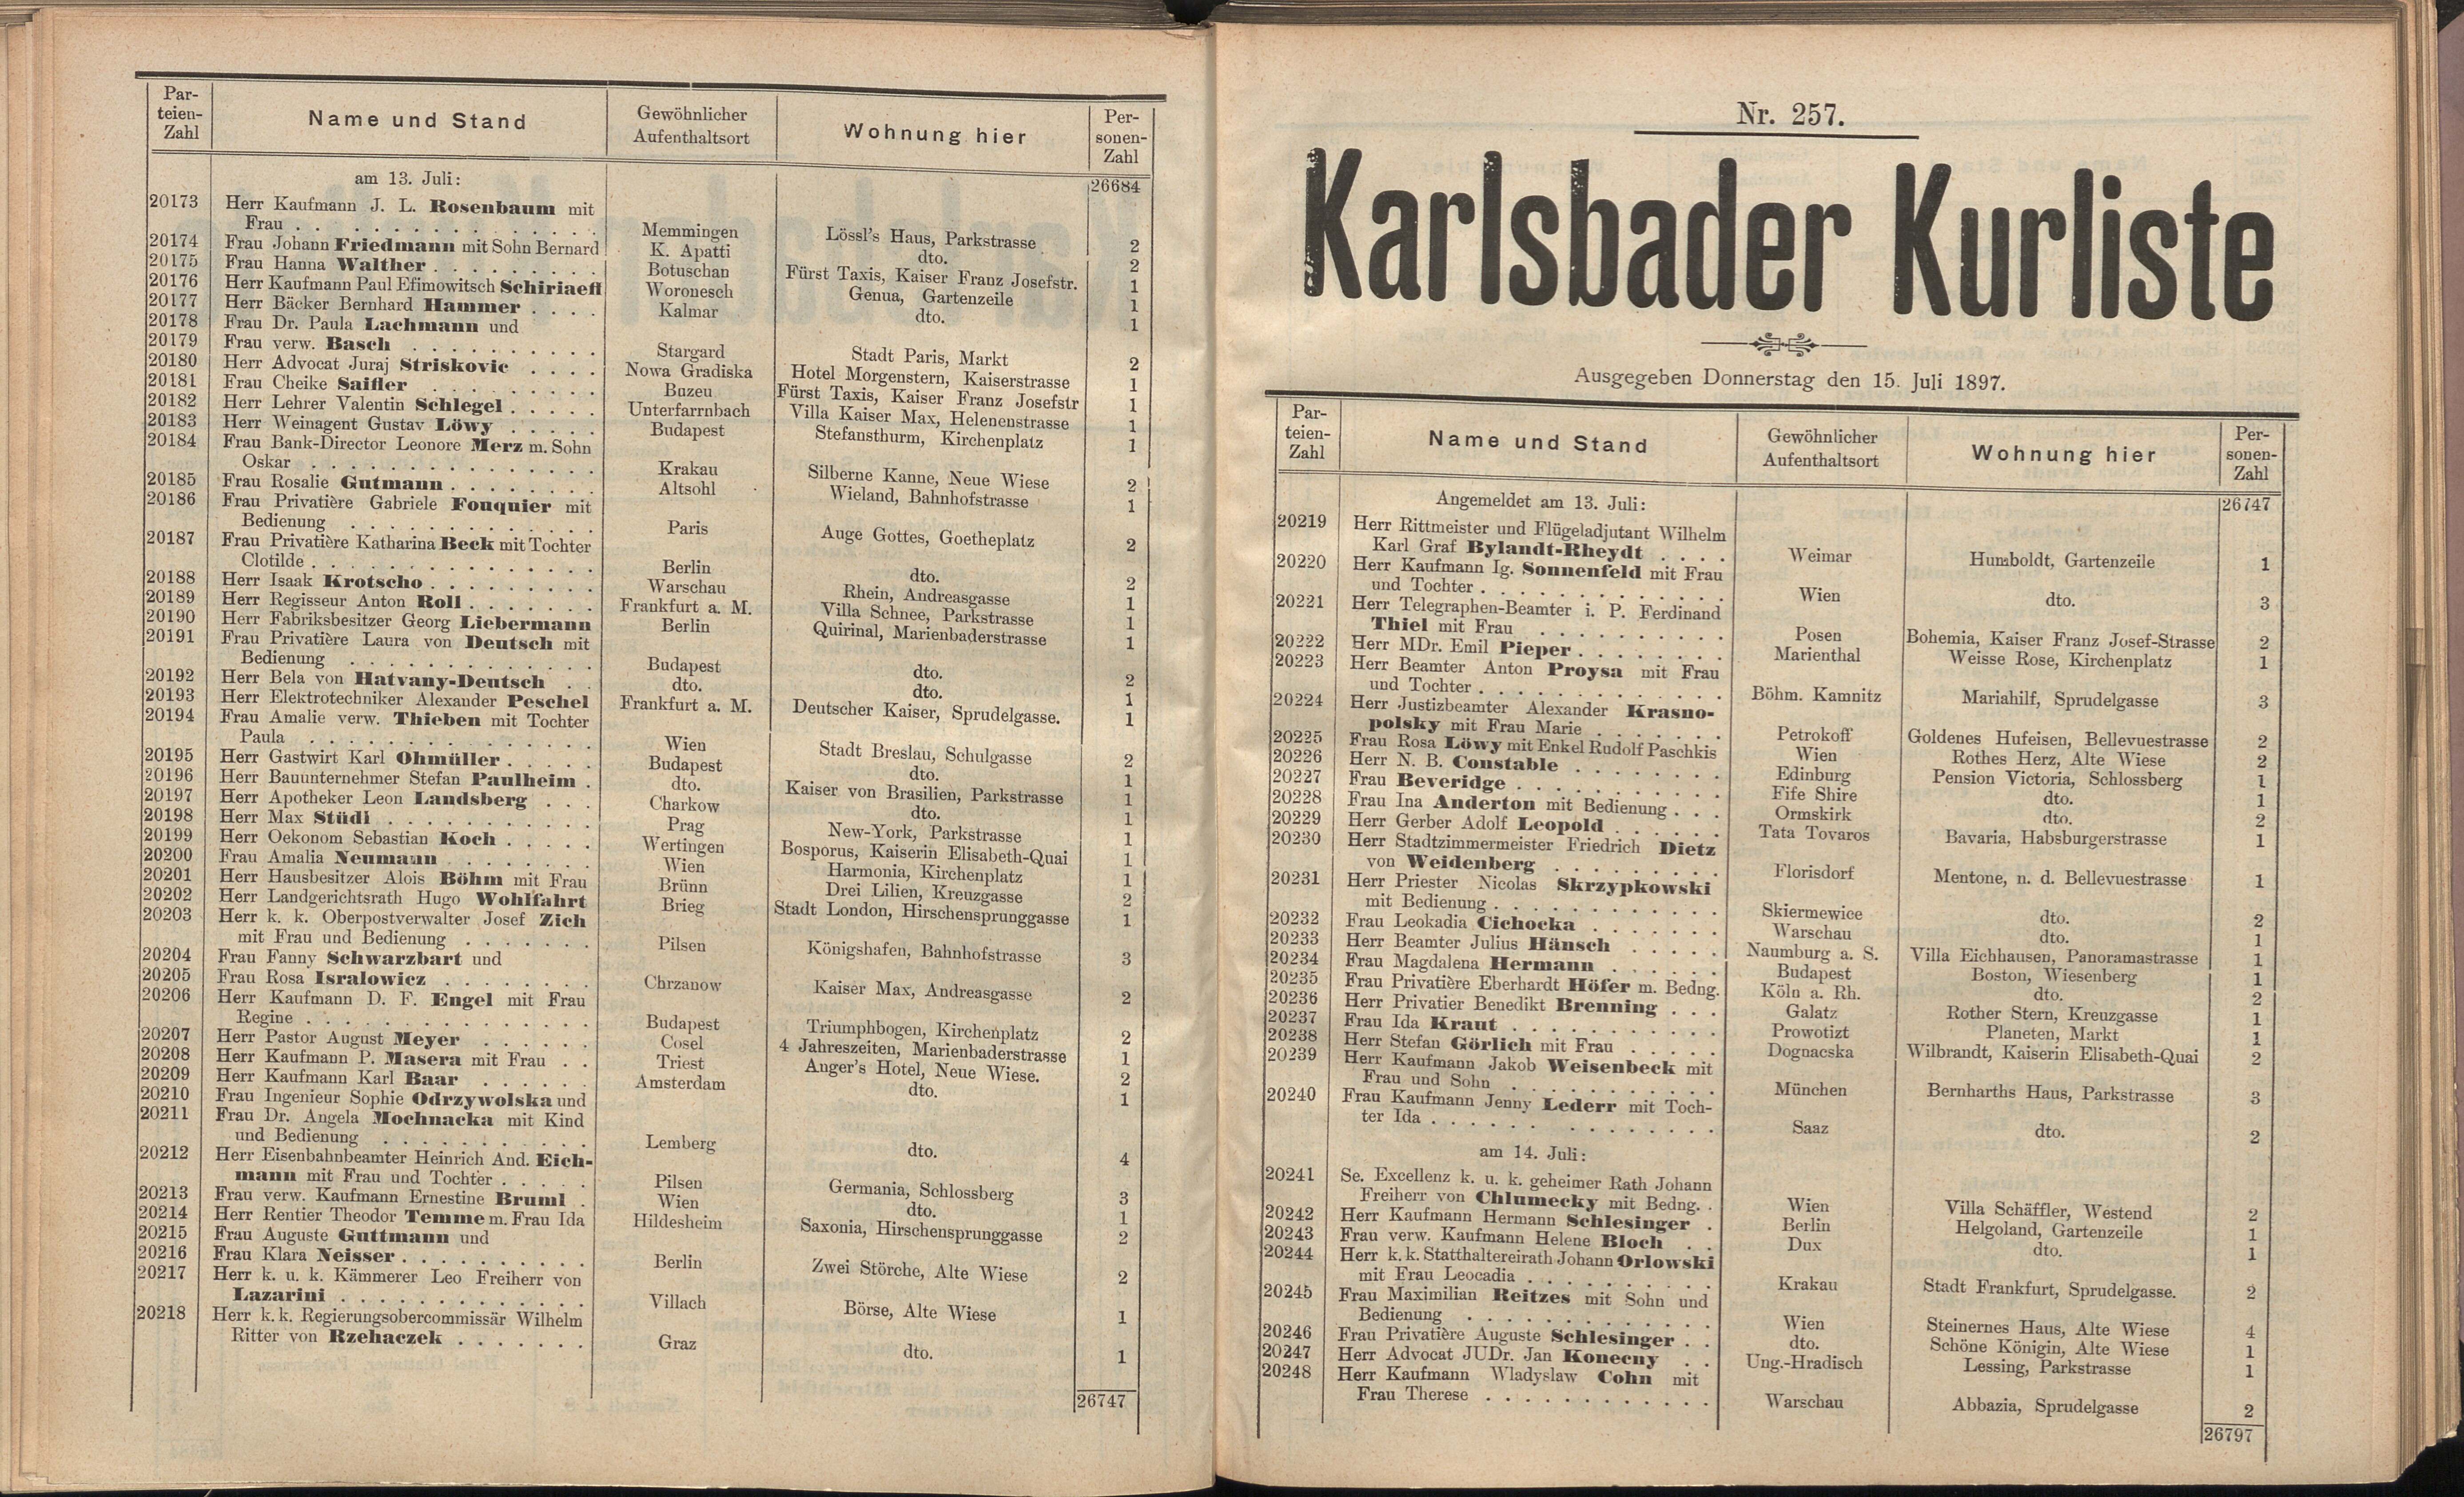 276. soap-kv_knihovna_karlsbader-kurliste-1897_2770